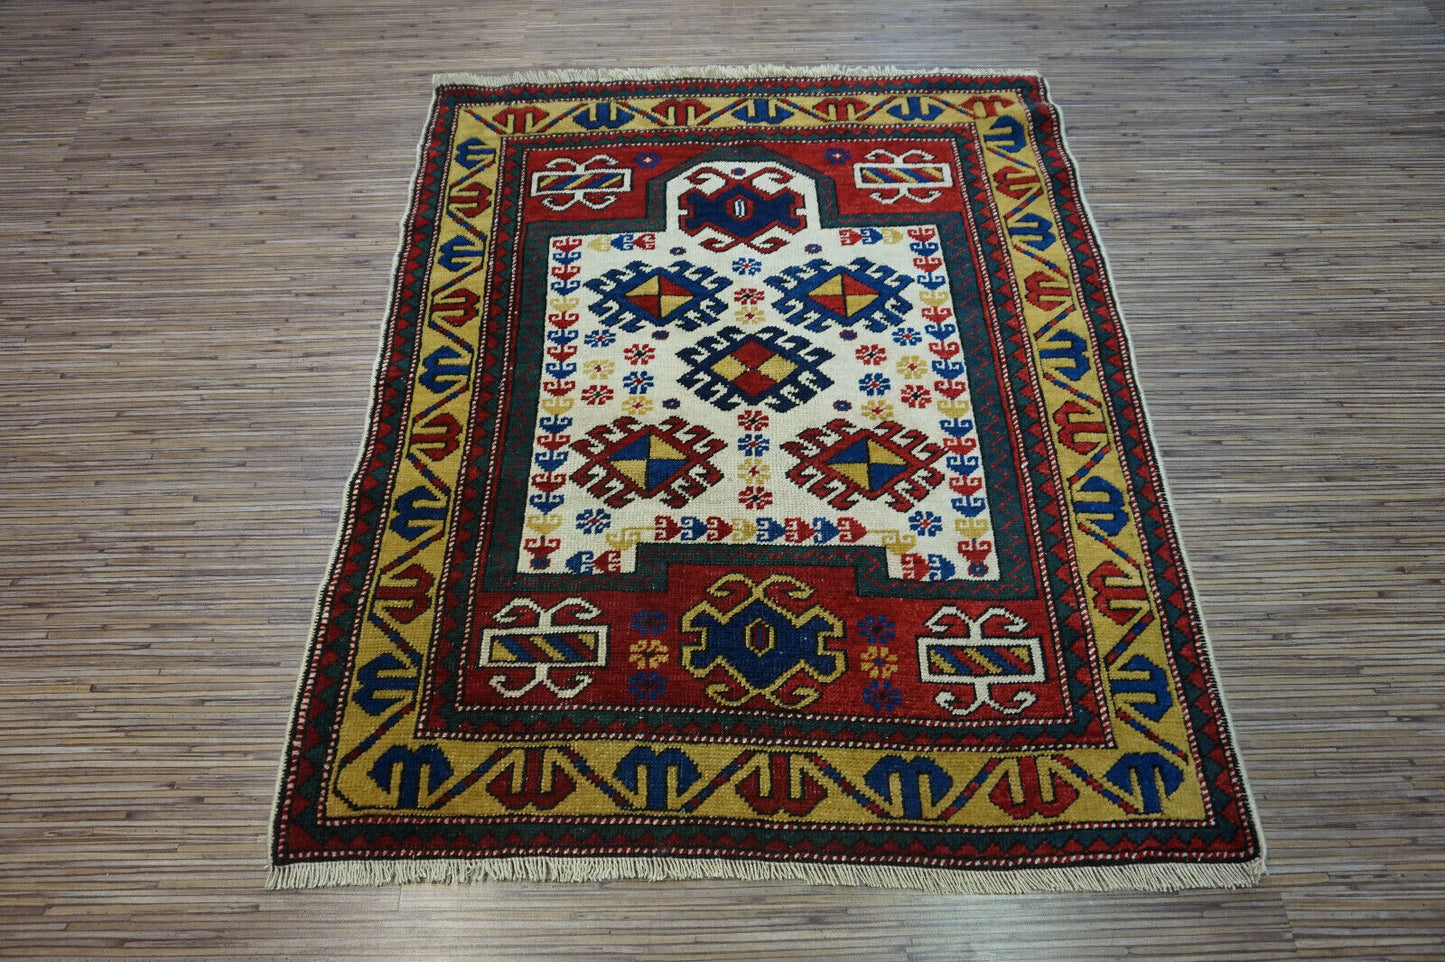 Side angle shot of the Handmade Antique Caucasian Kazak Prayer Rug showcasing size and scale